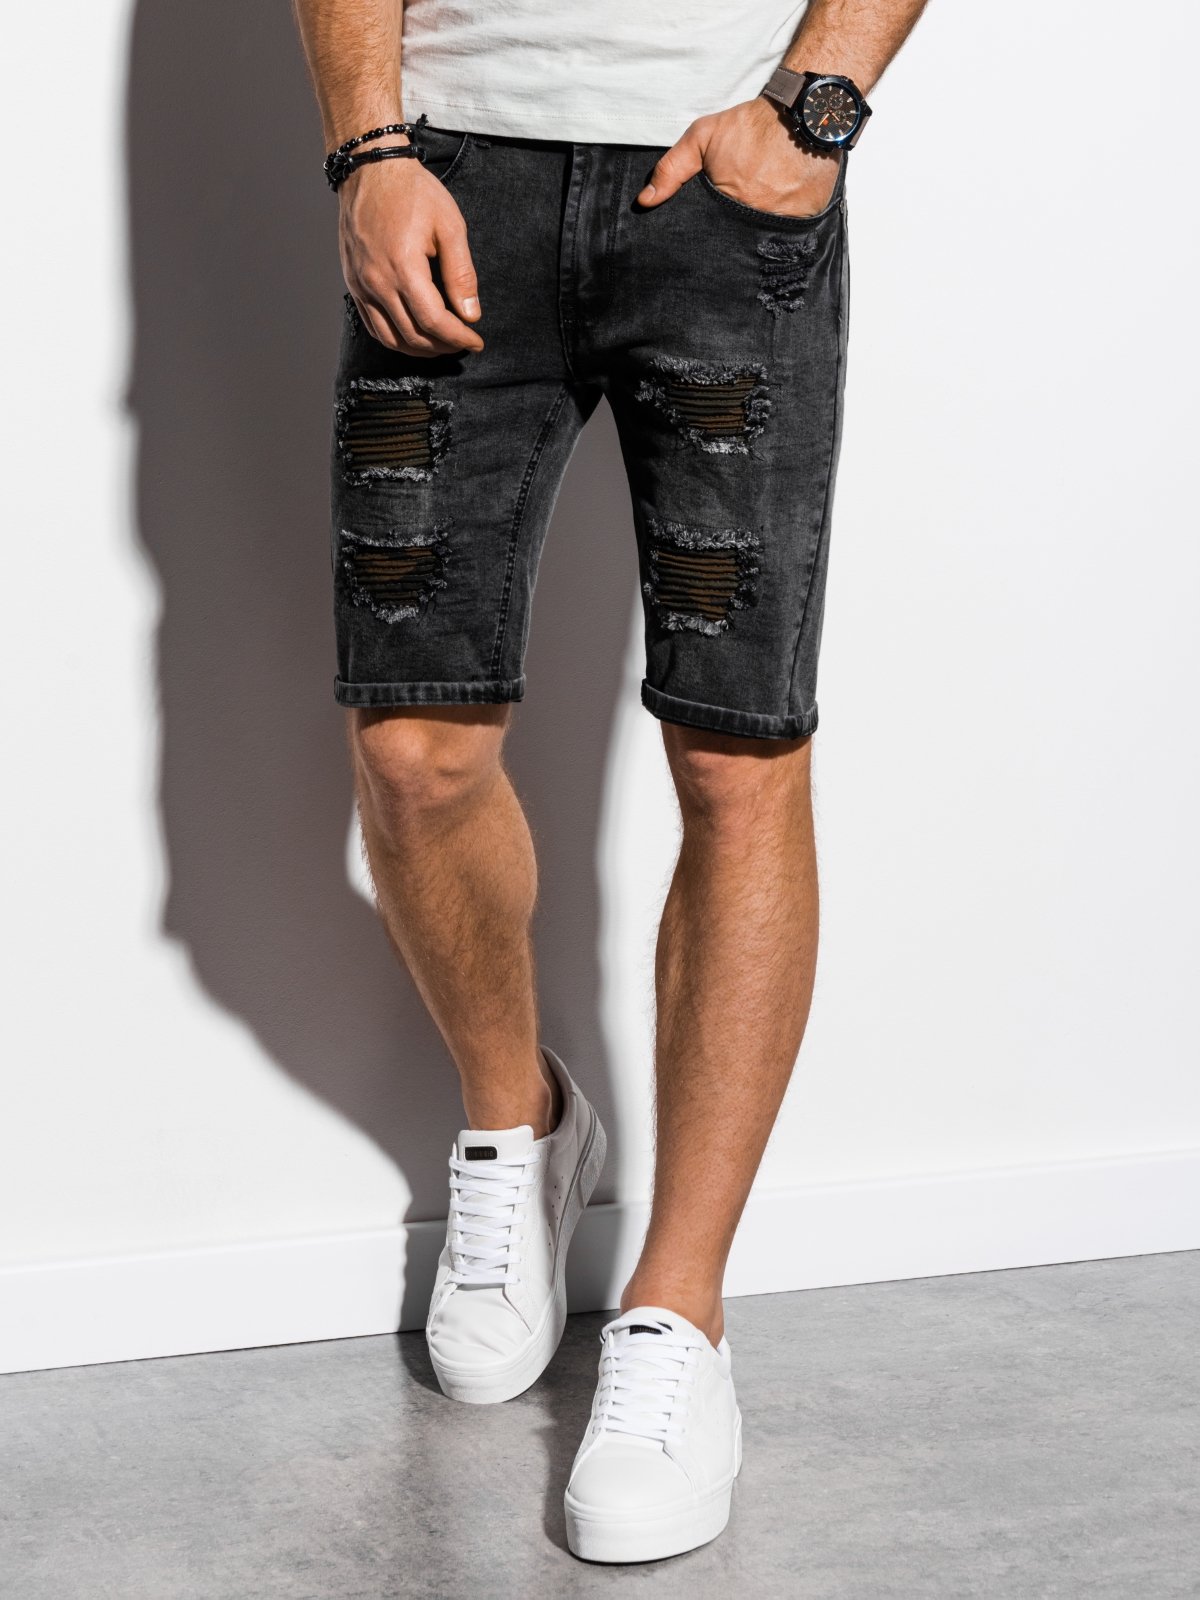 Blac Label Denim Shorts for Men | Mercari-donghotantheky.vn